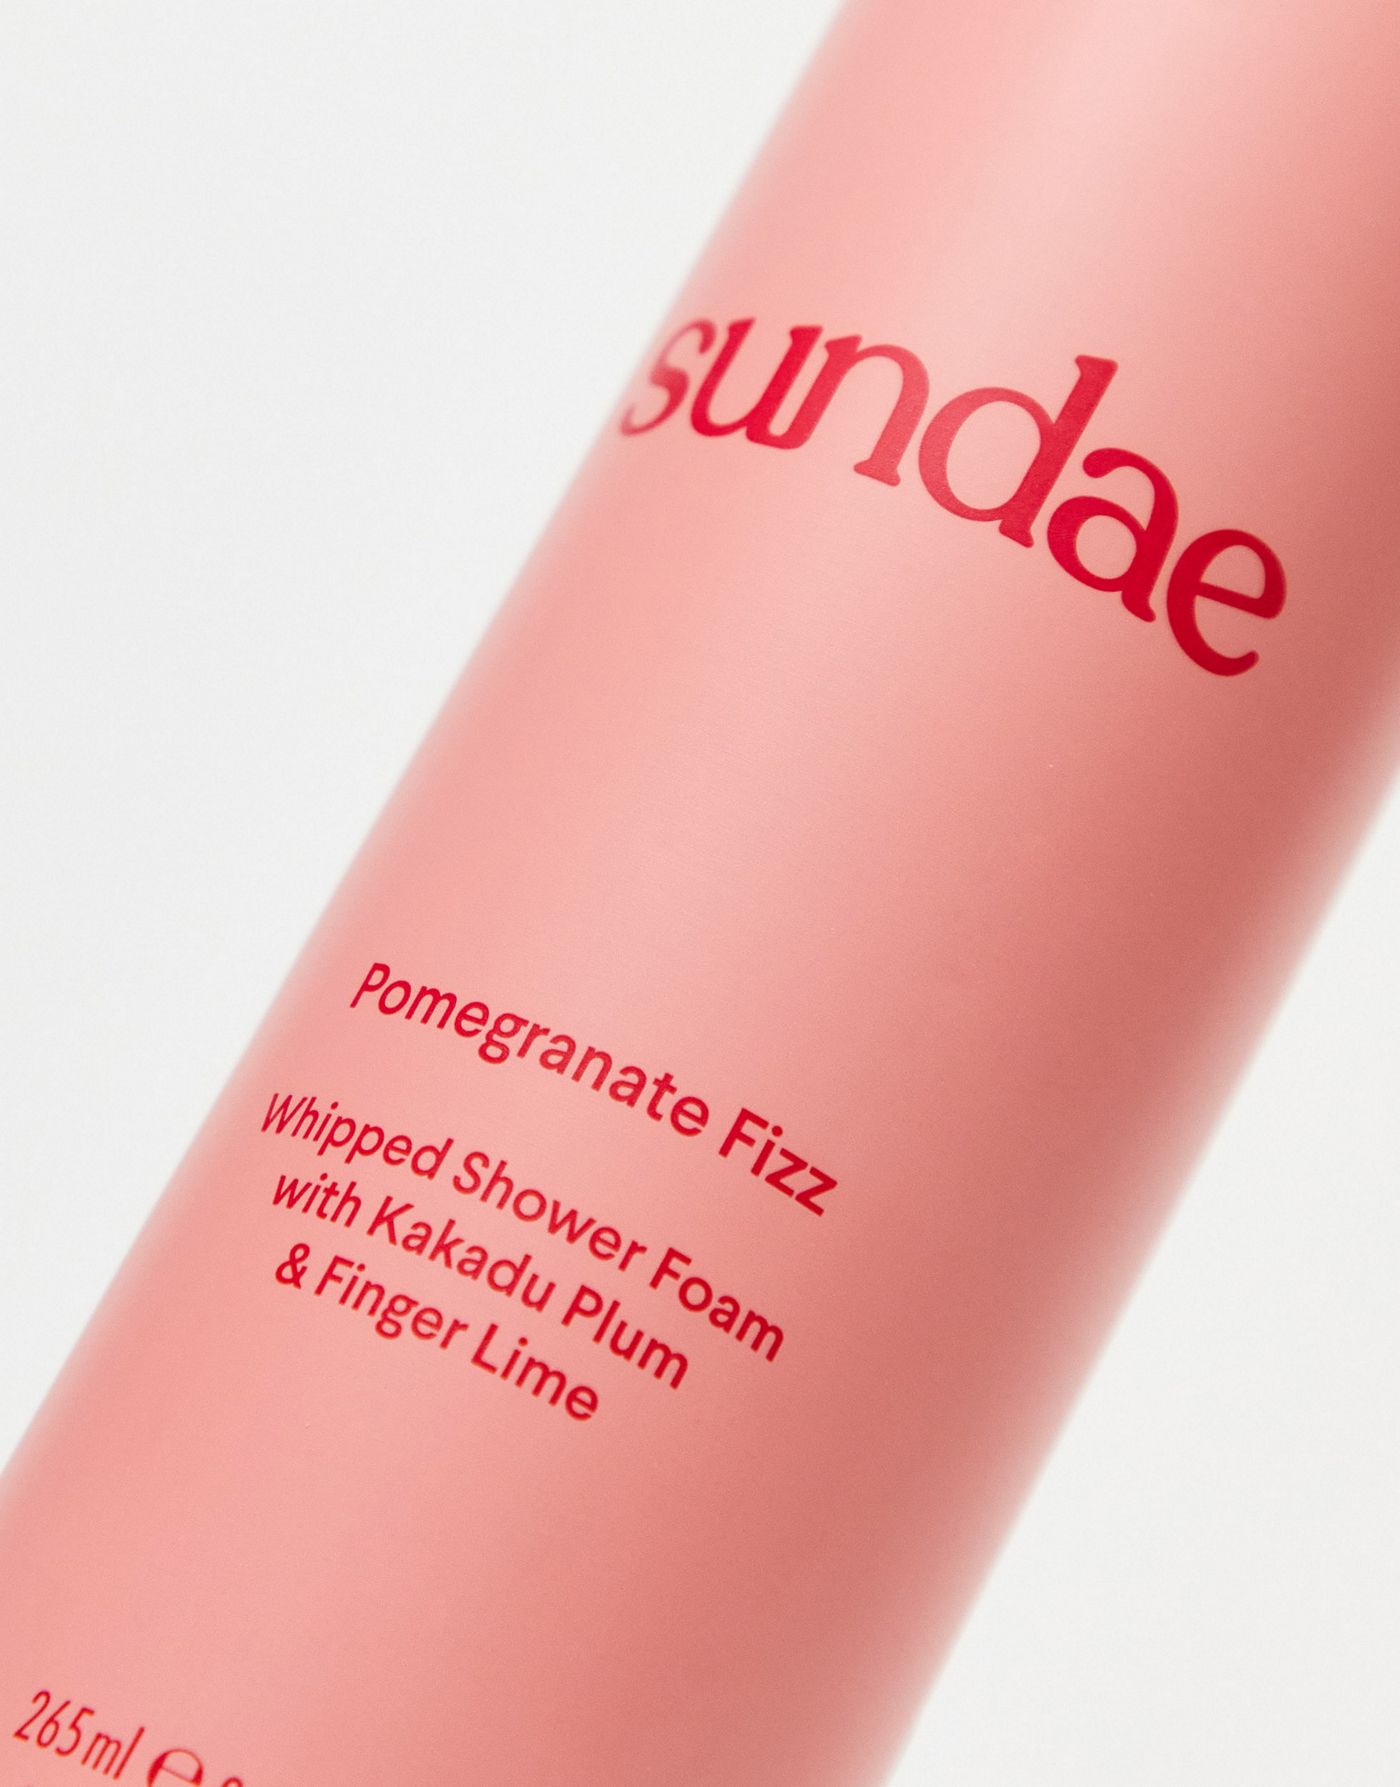 Sundae Body Whipped Shower Foam Pomegranate Fizz with Kadkadu Plum & Finger Lime